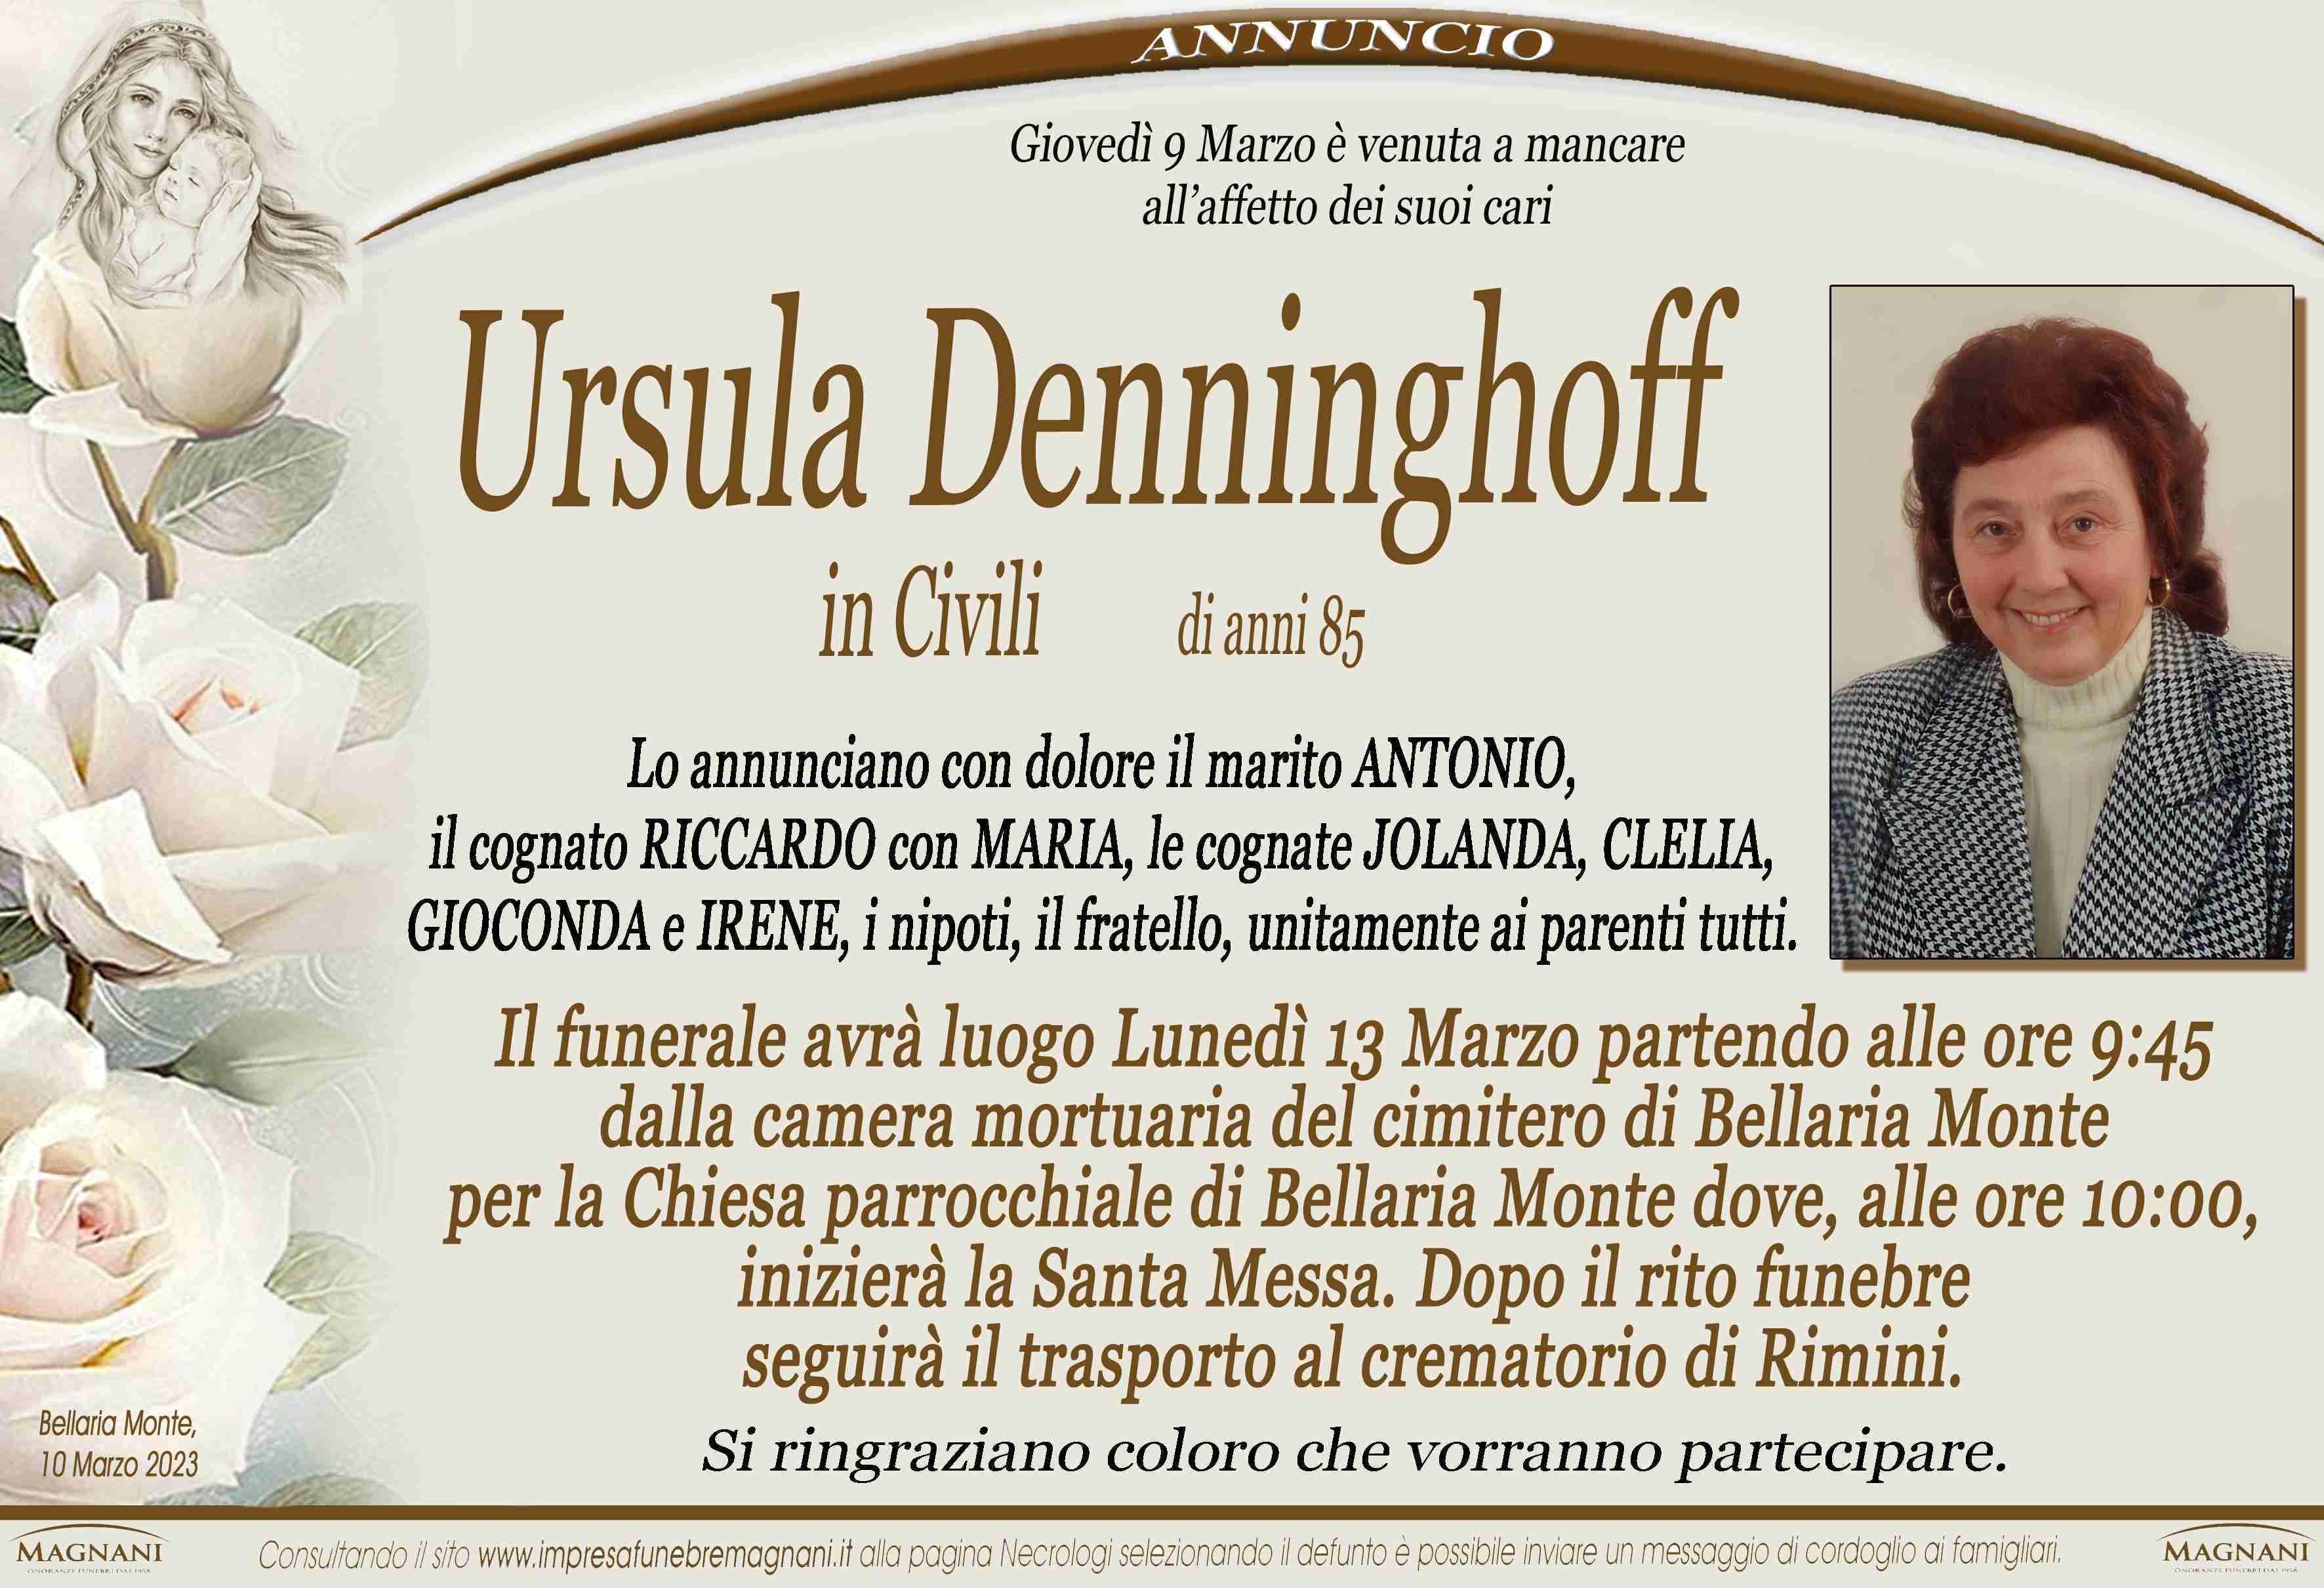 Ursula Denninghoff